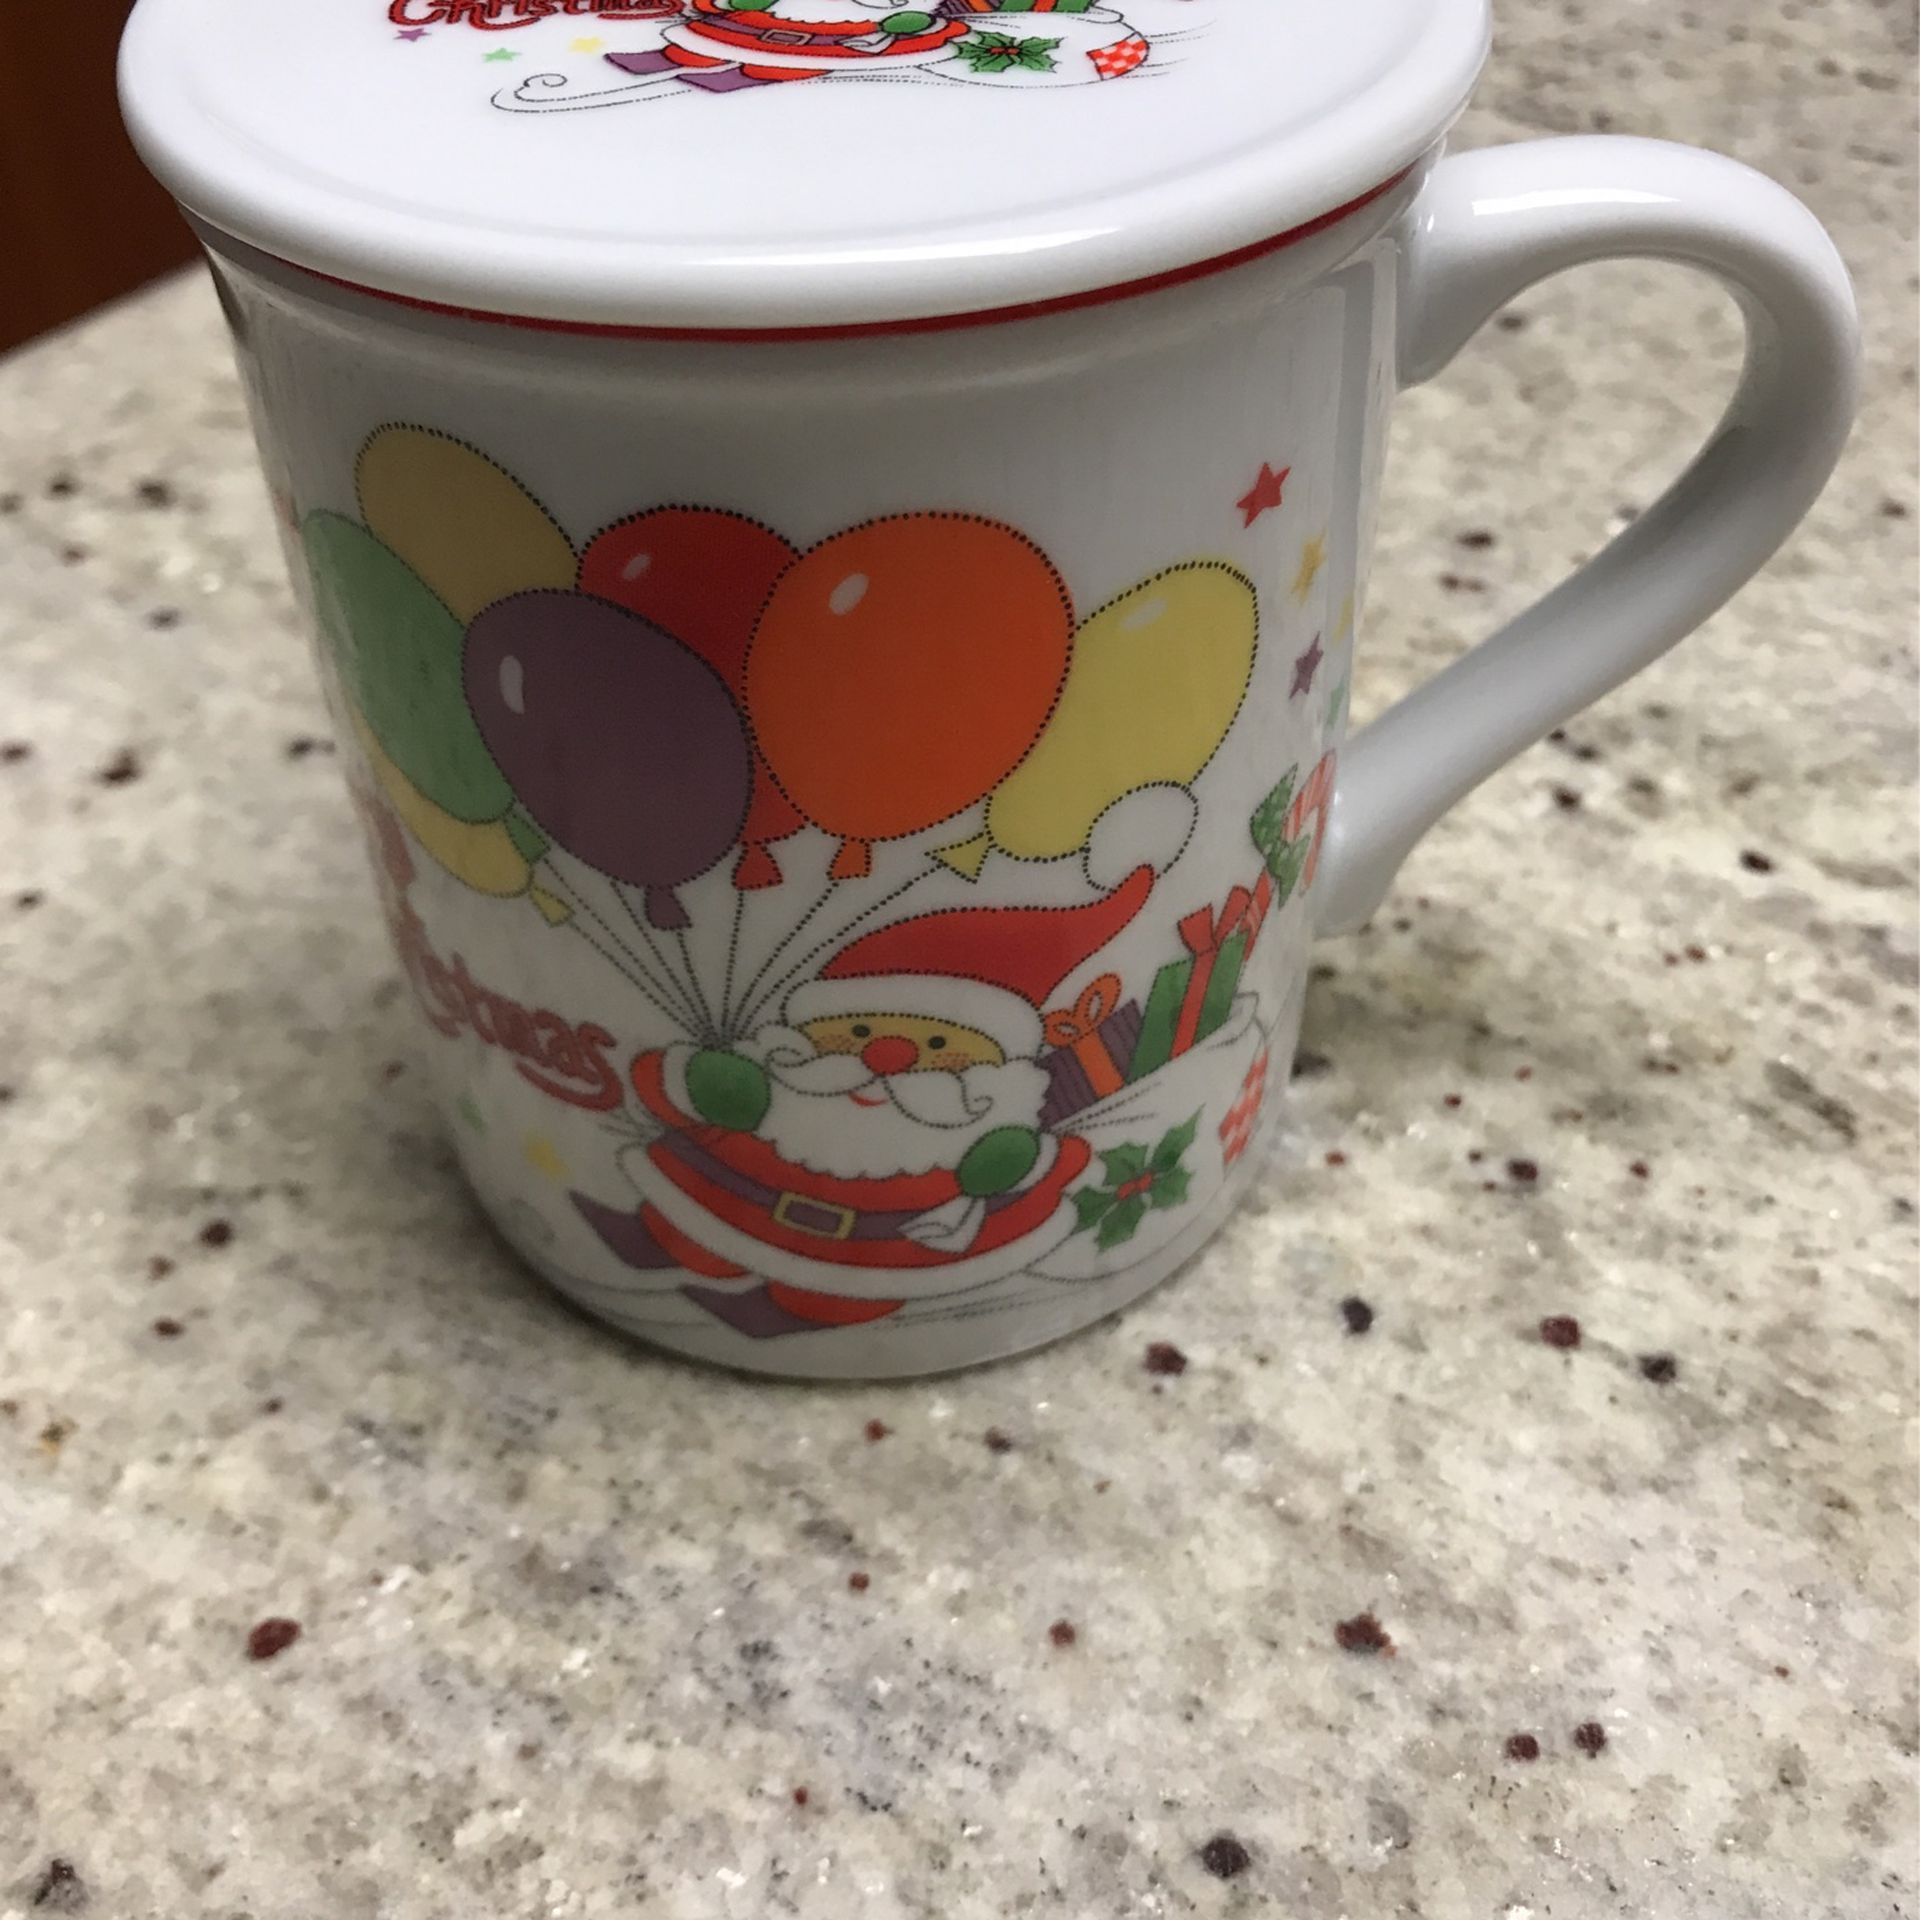 Merry Christmas Santa with Lid (Ceramic ) coffee /tea cup